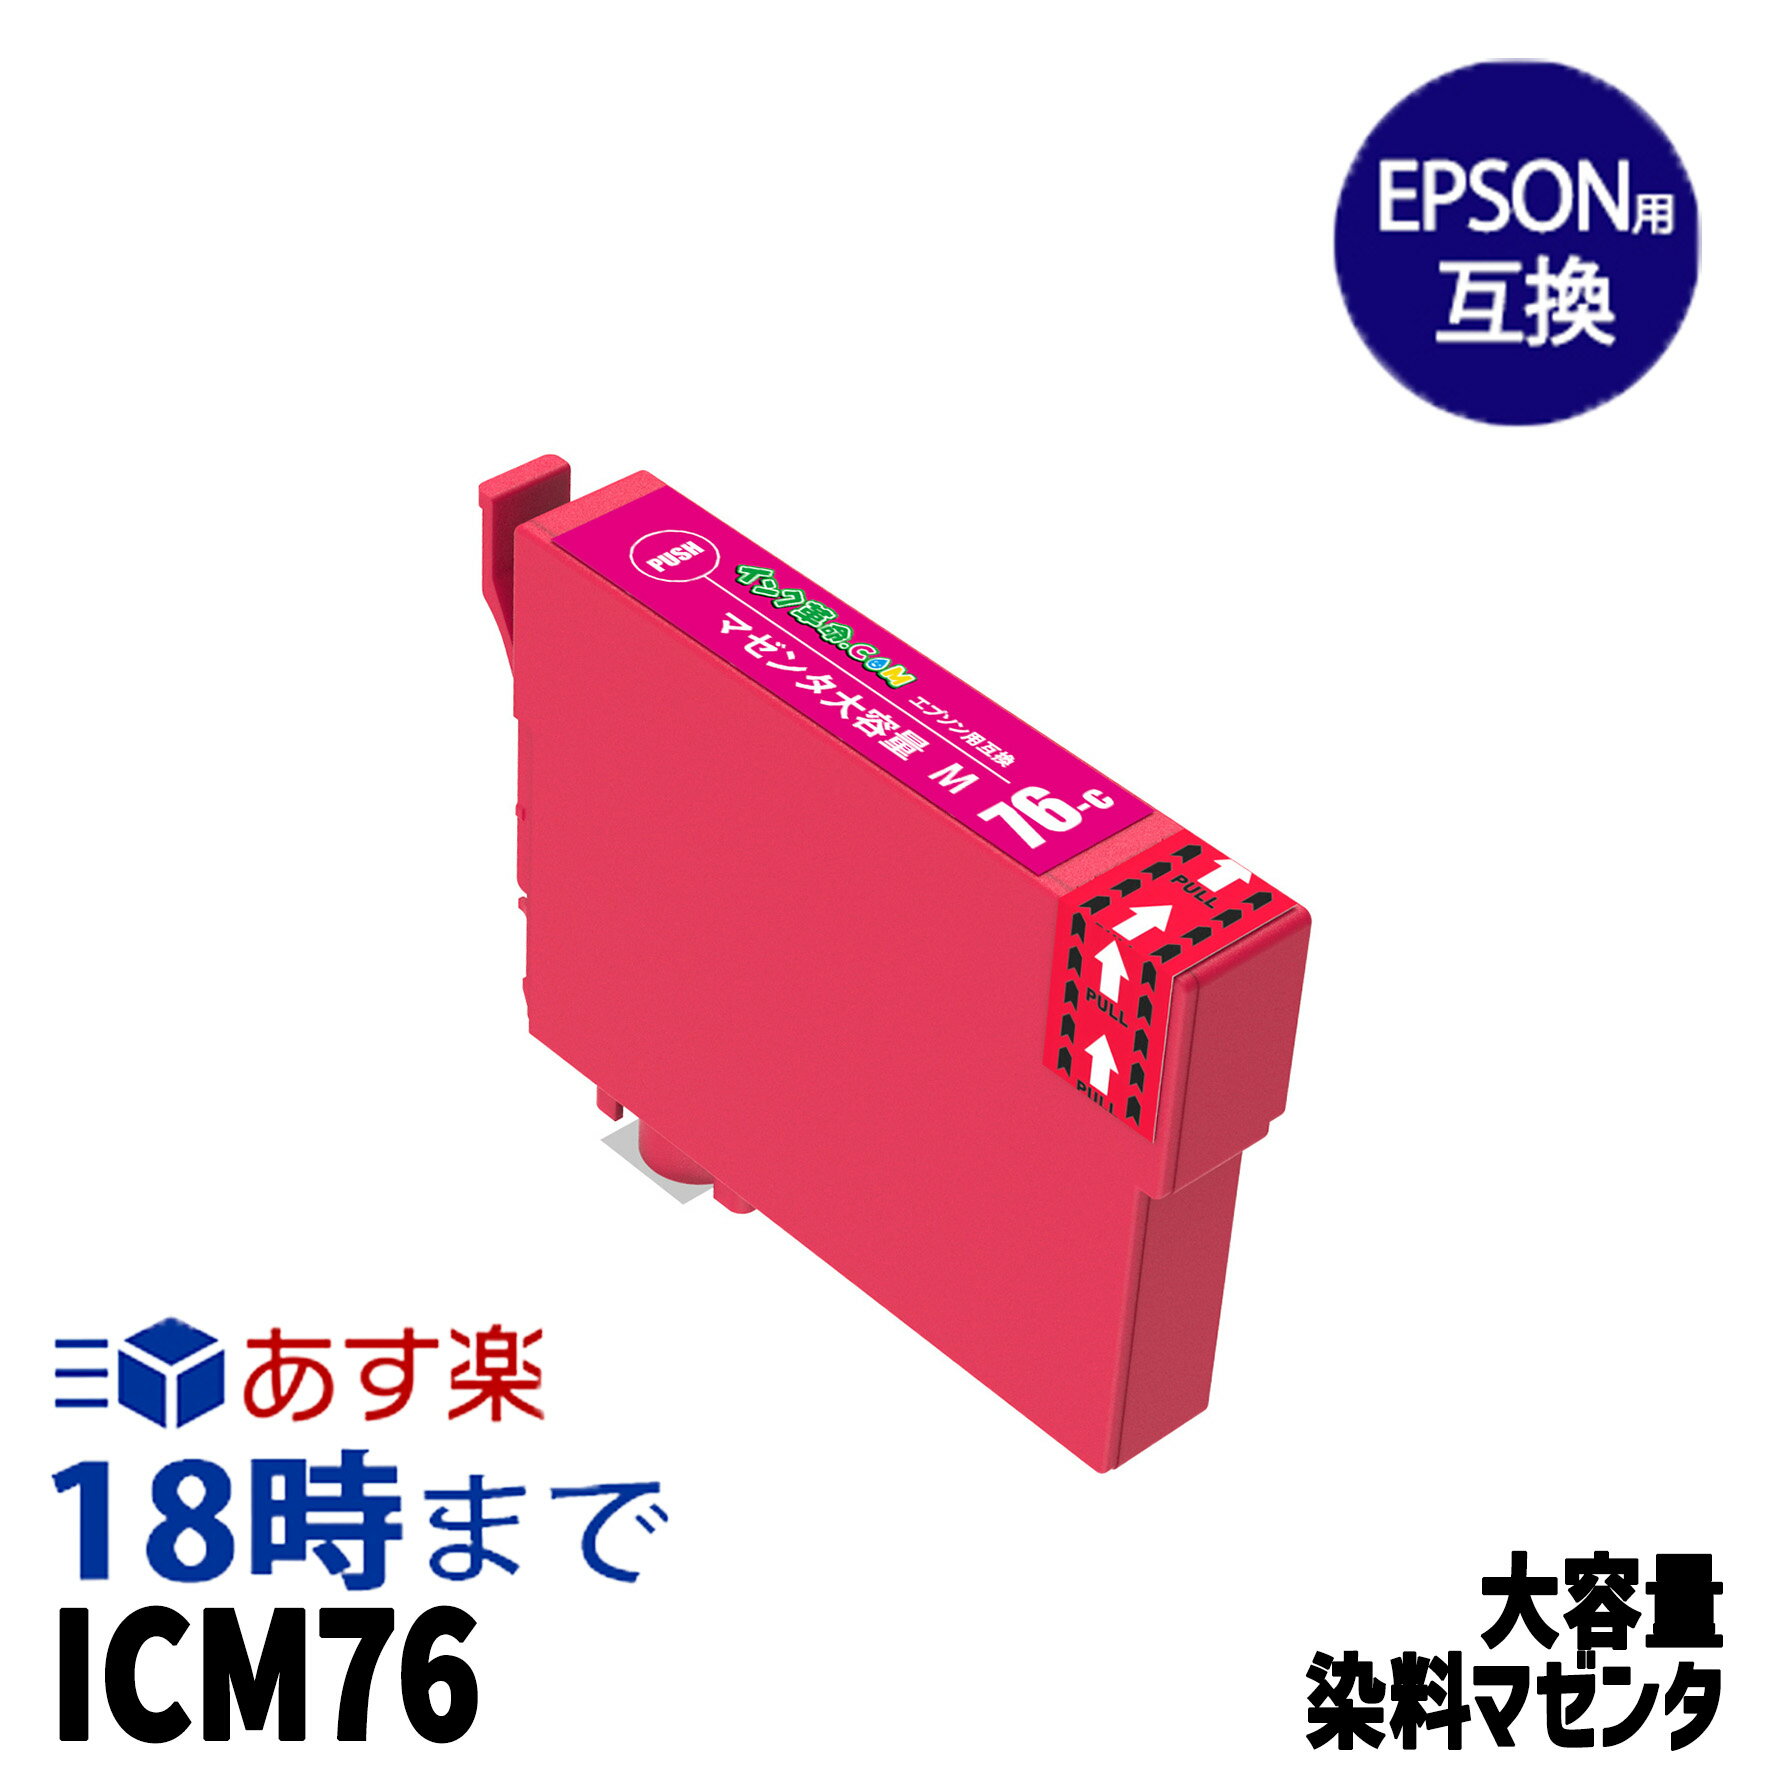 ICM76 染料マゼンタ IC76 大容量 エプソン用 EPSON用 互換インク ビジネスインクジェット【インク革命】